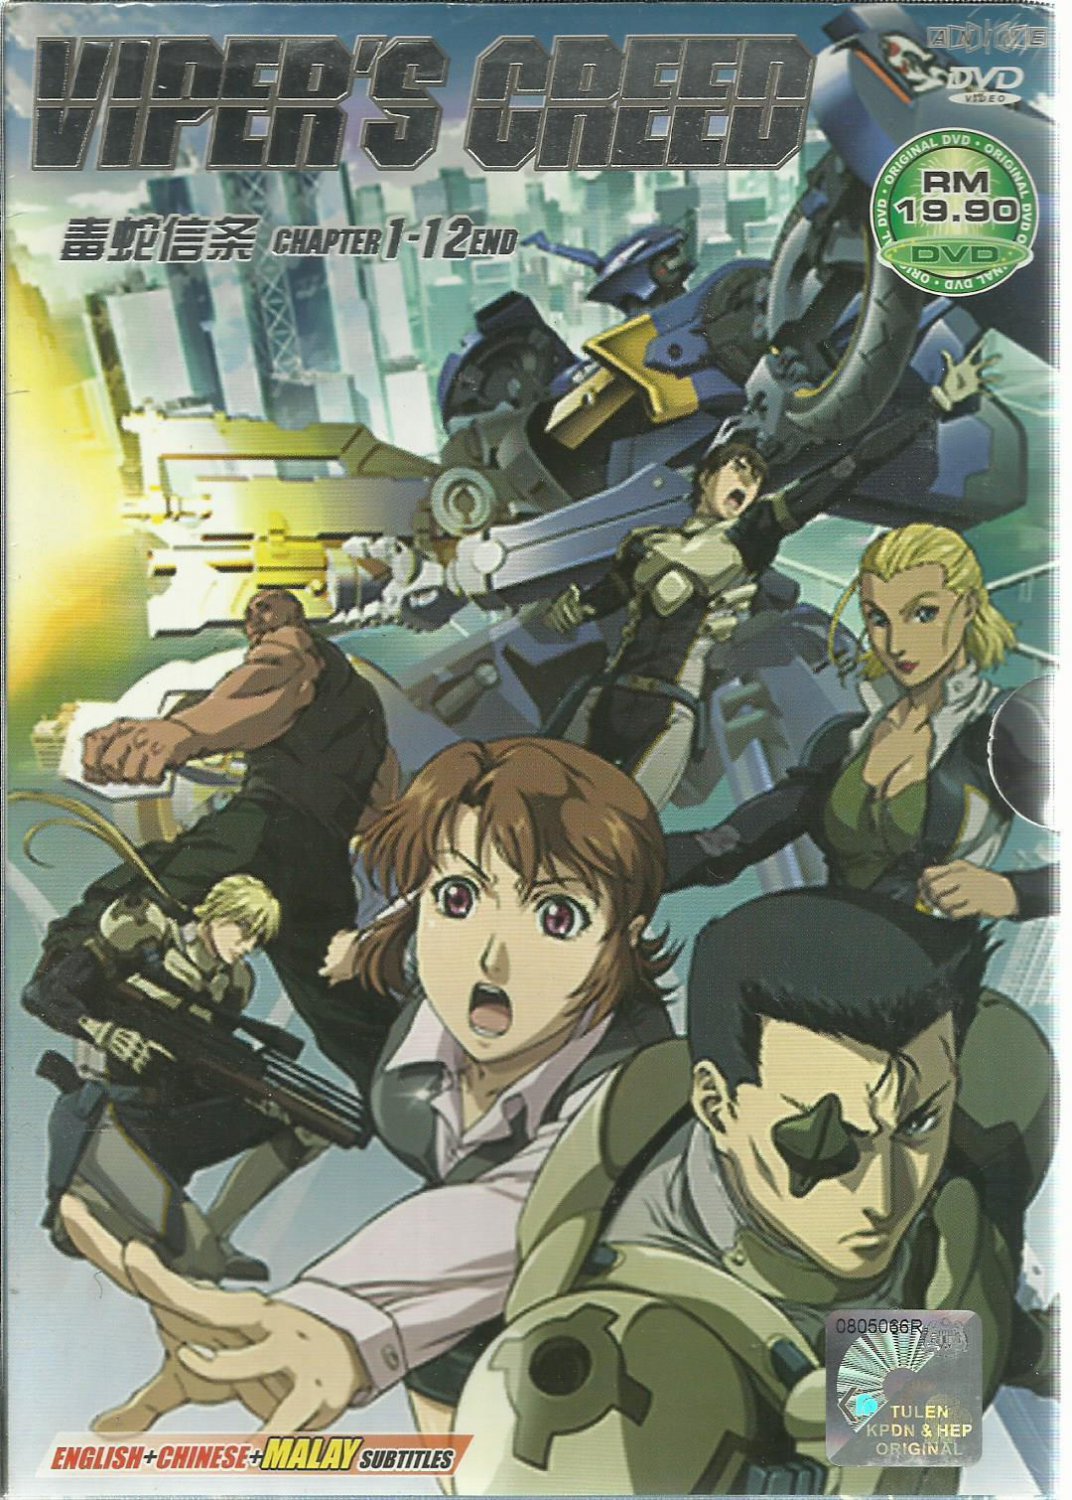 DVD JAPANESE MECHA ANIME Viper's Creed Vol.1-12End English Sub Region All